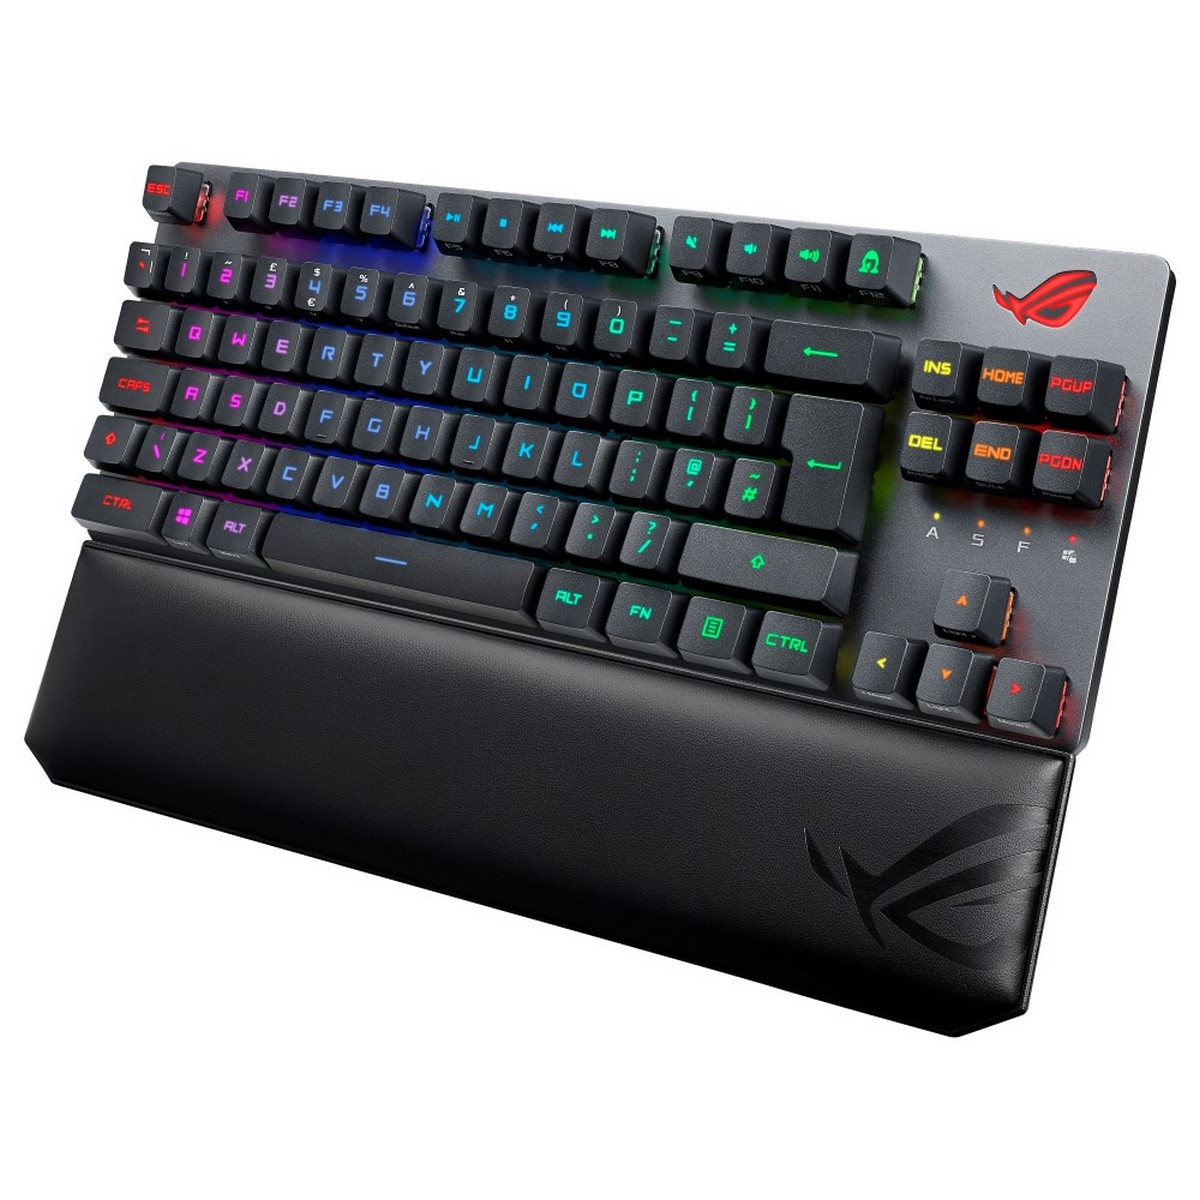 ASUS ROG Announces Strix Scope RX Keyboard